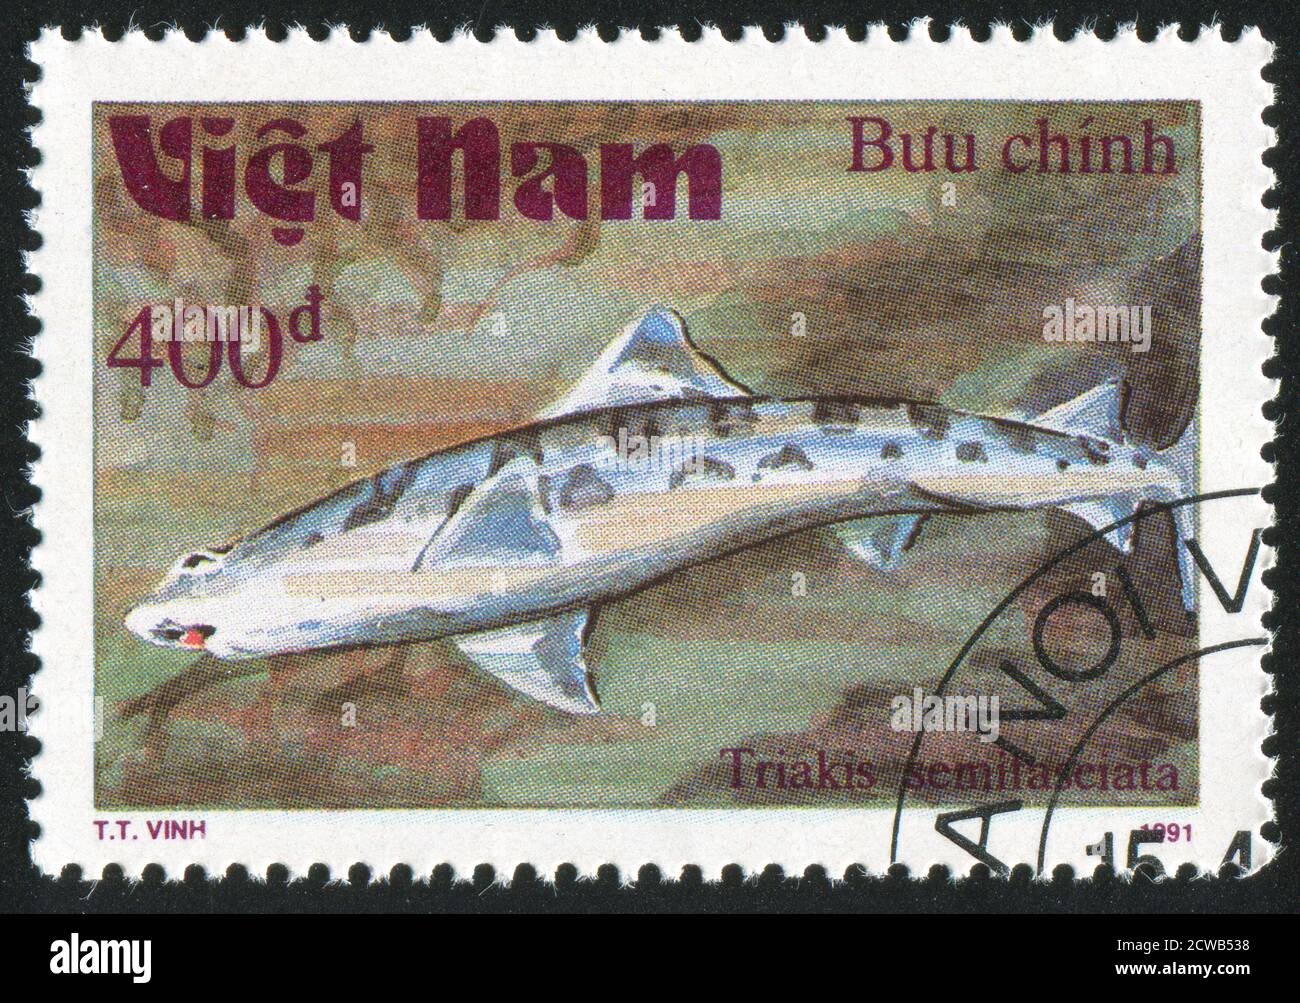 VIET NAM - CIRCA 1991: stamp printed by Viet Nam, shows Triakis semifasciata, circa 1991 Stock Photo